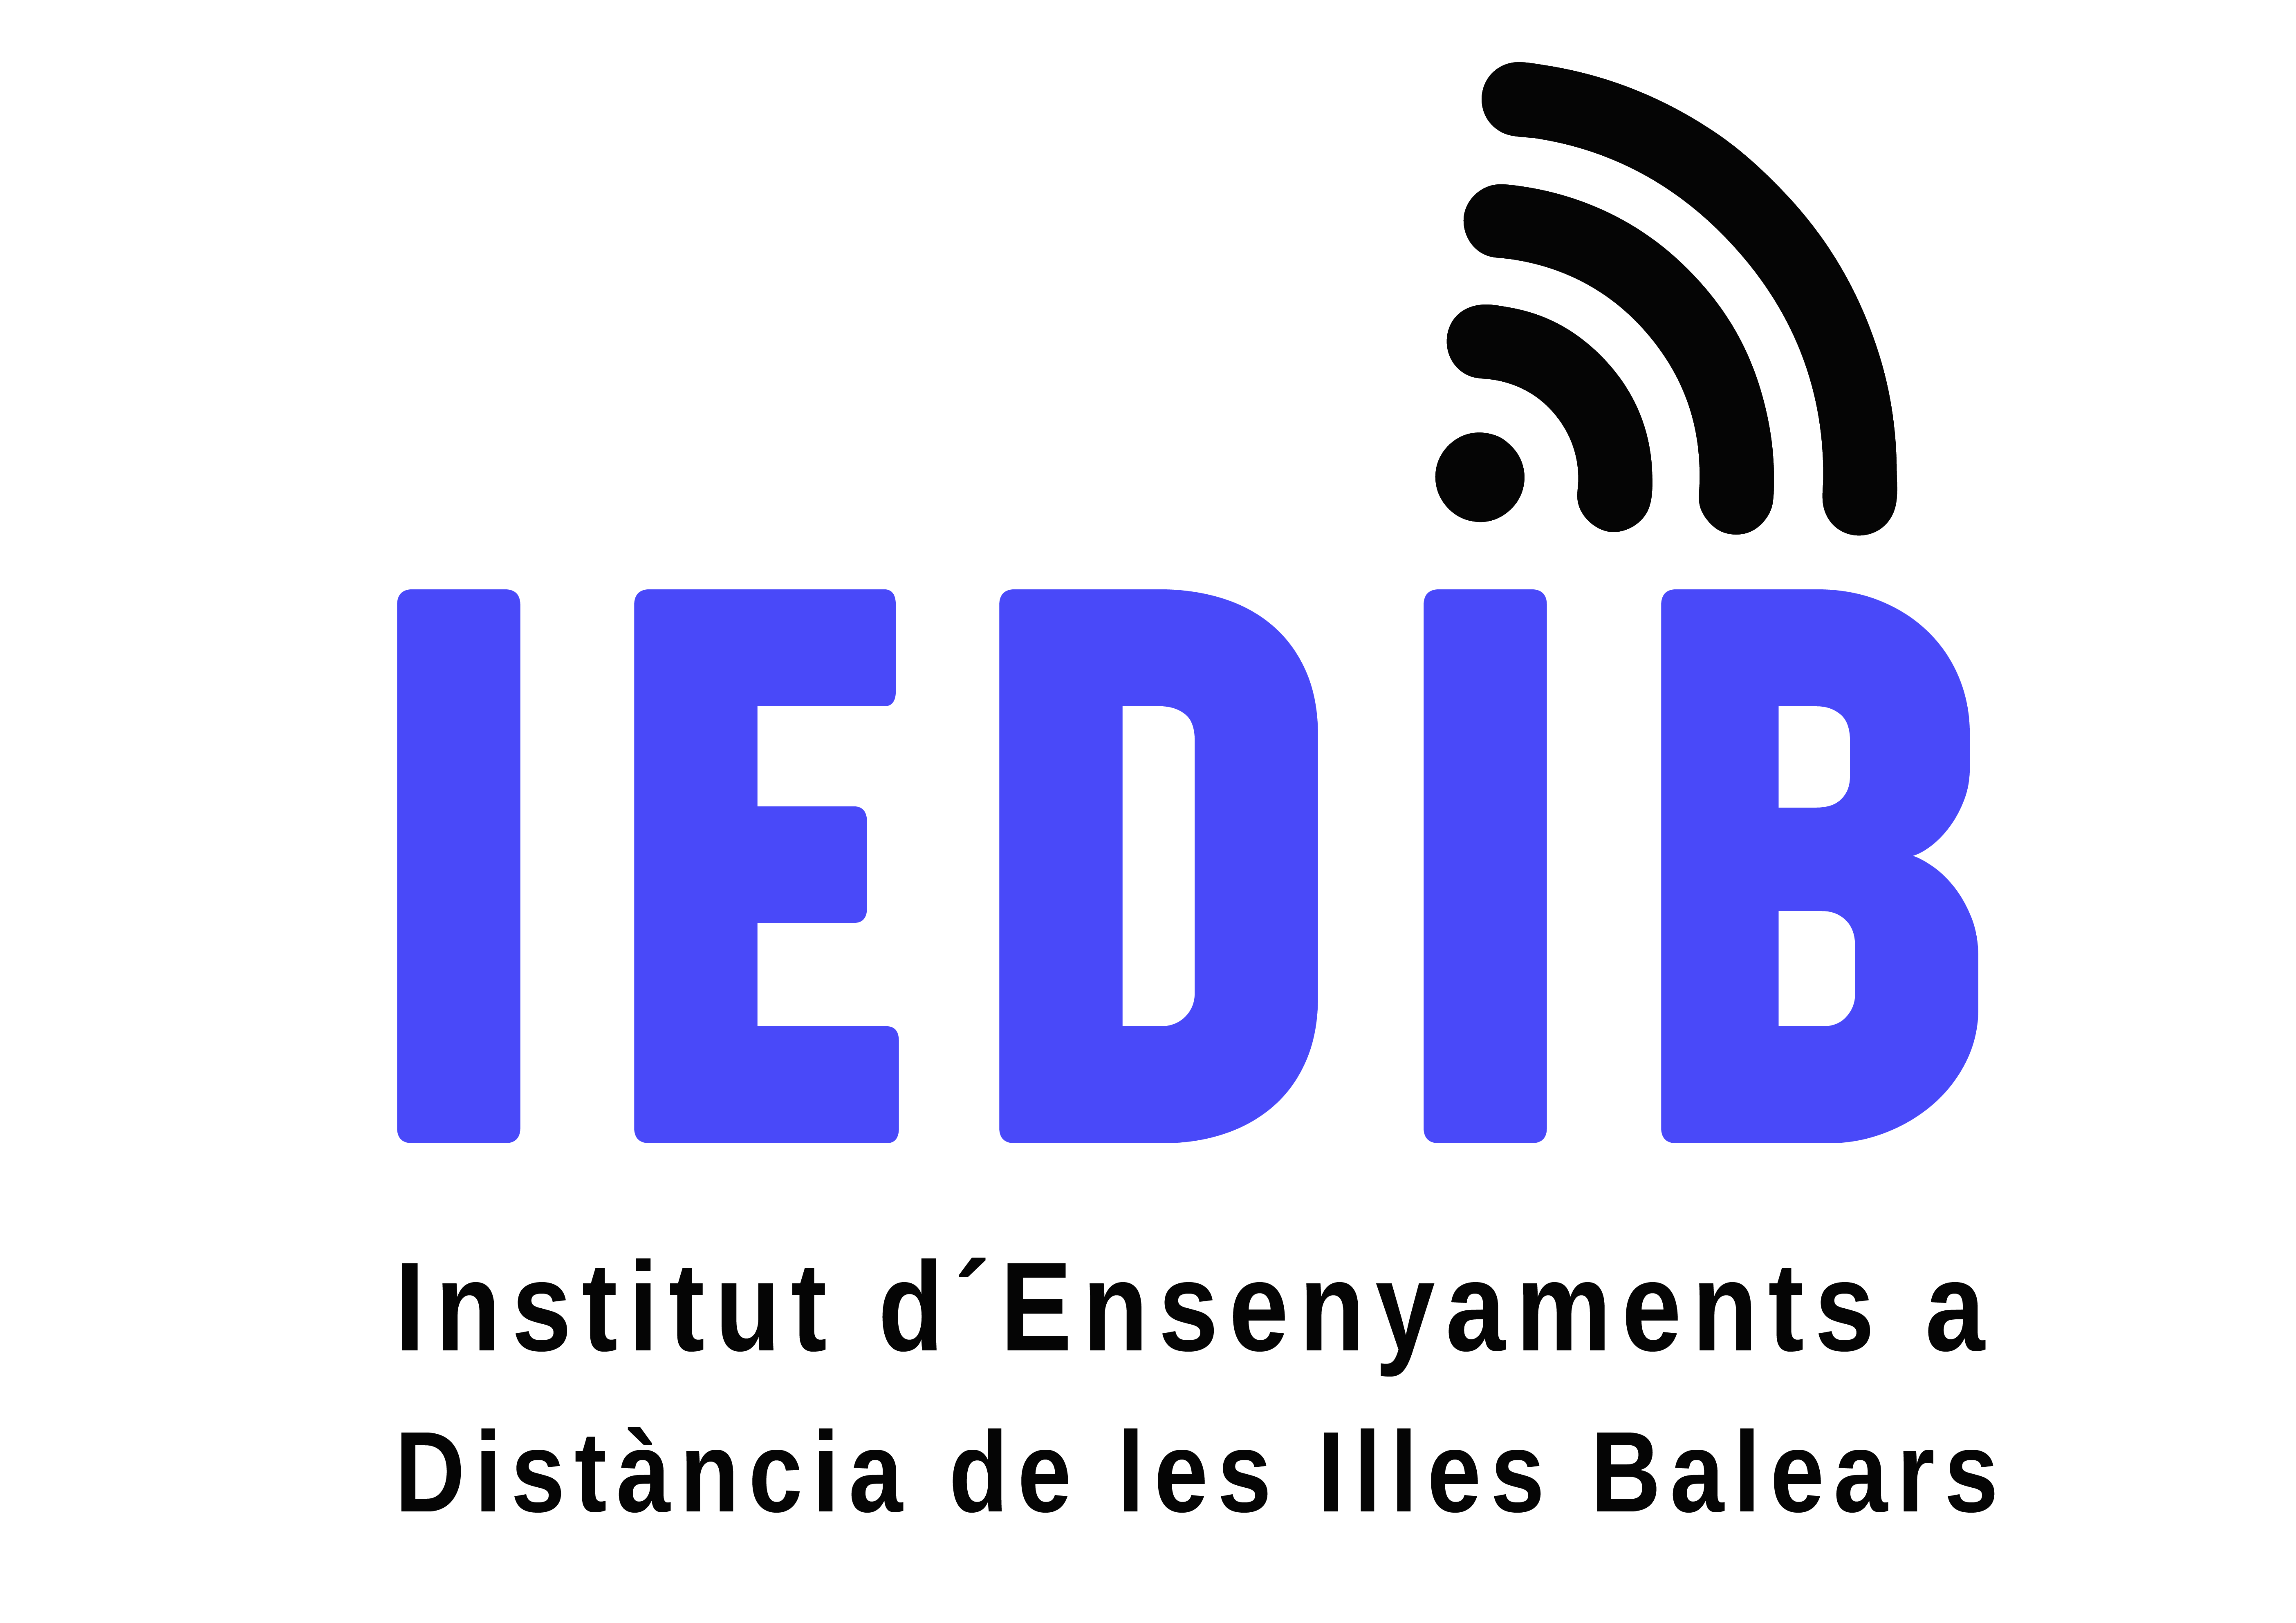 desc_IEDIB Logo Final Web_Maiuìscules_RGB-02.png